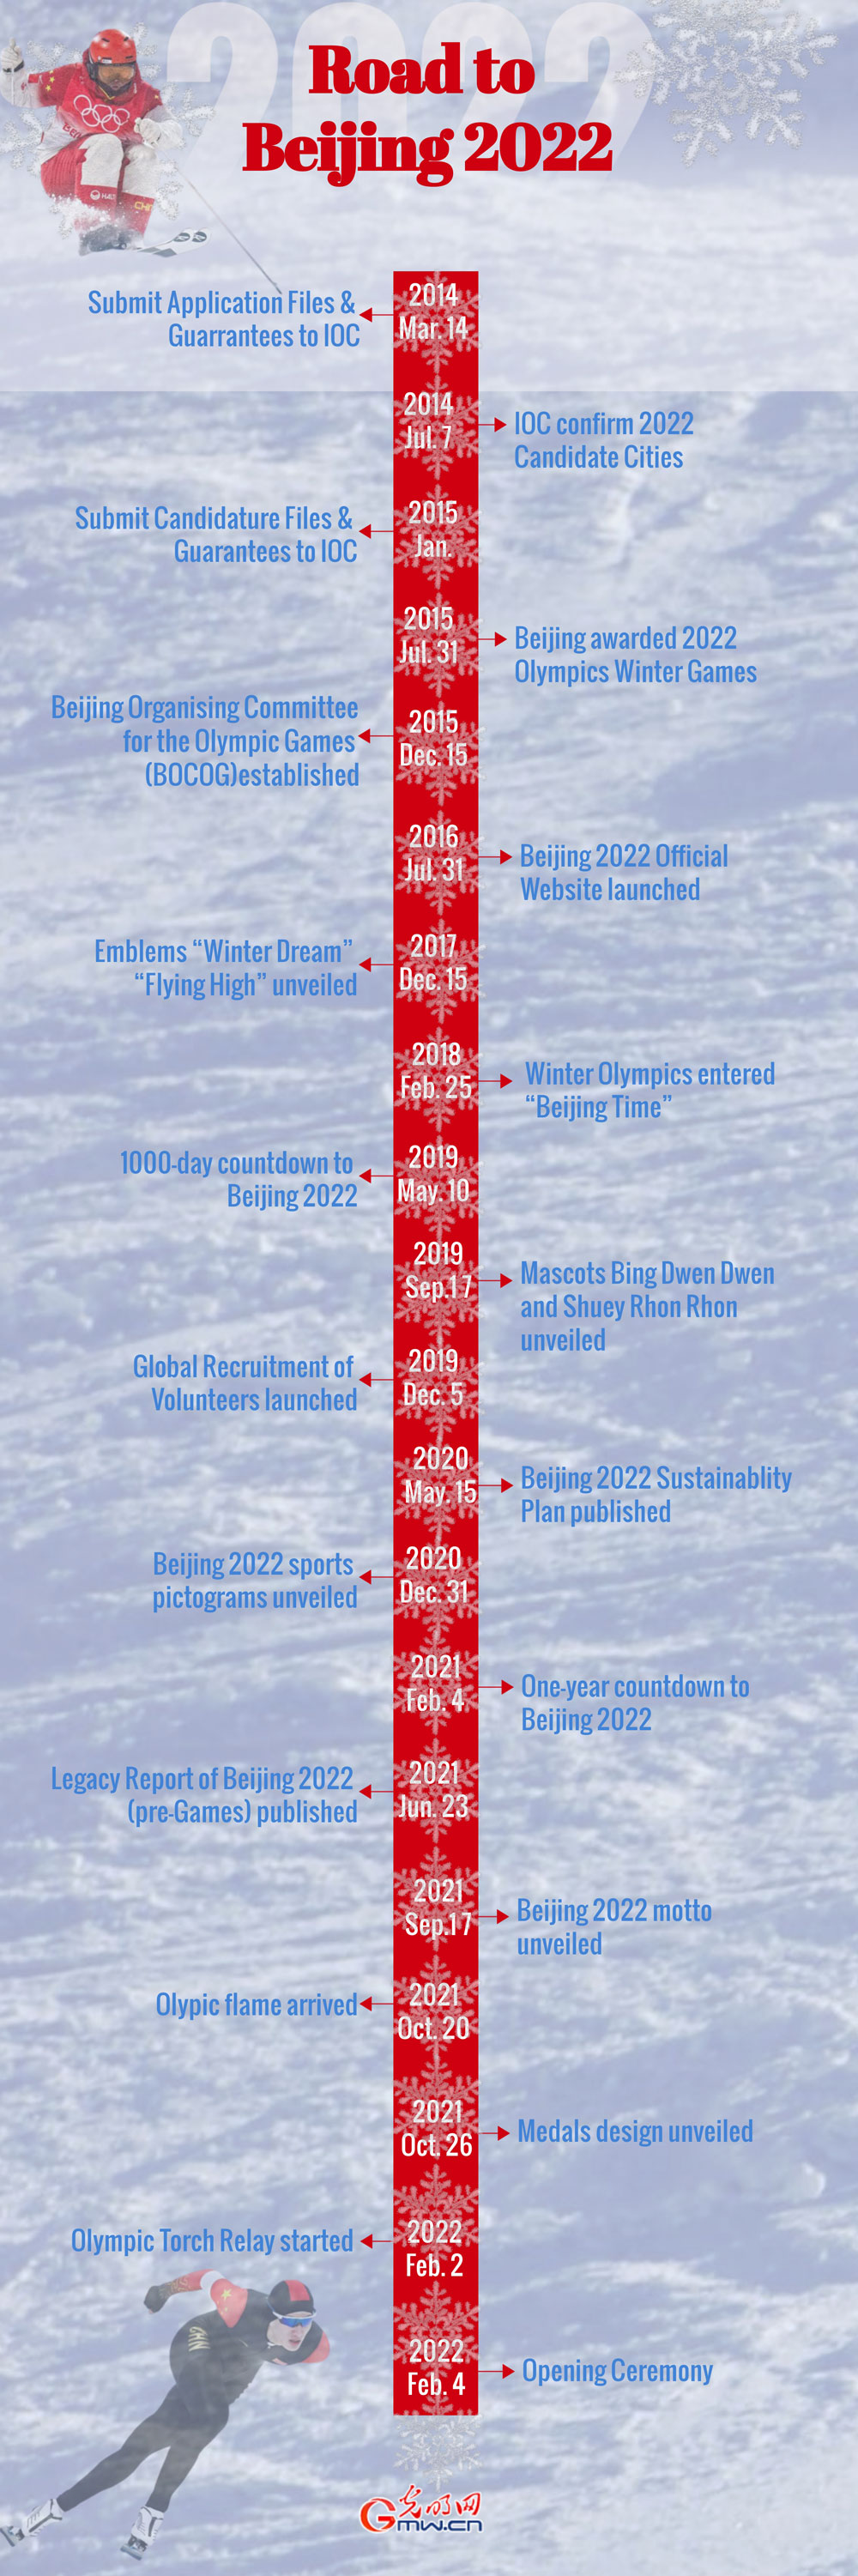 Timeline: Road to Beijing 2022